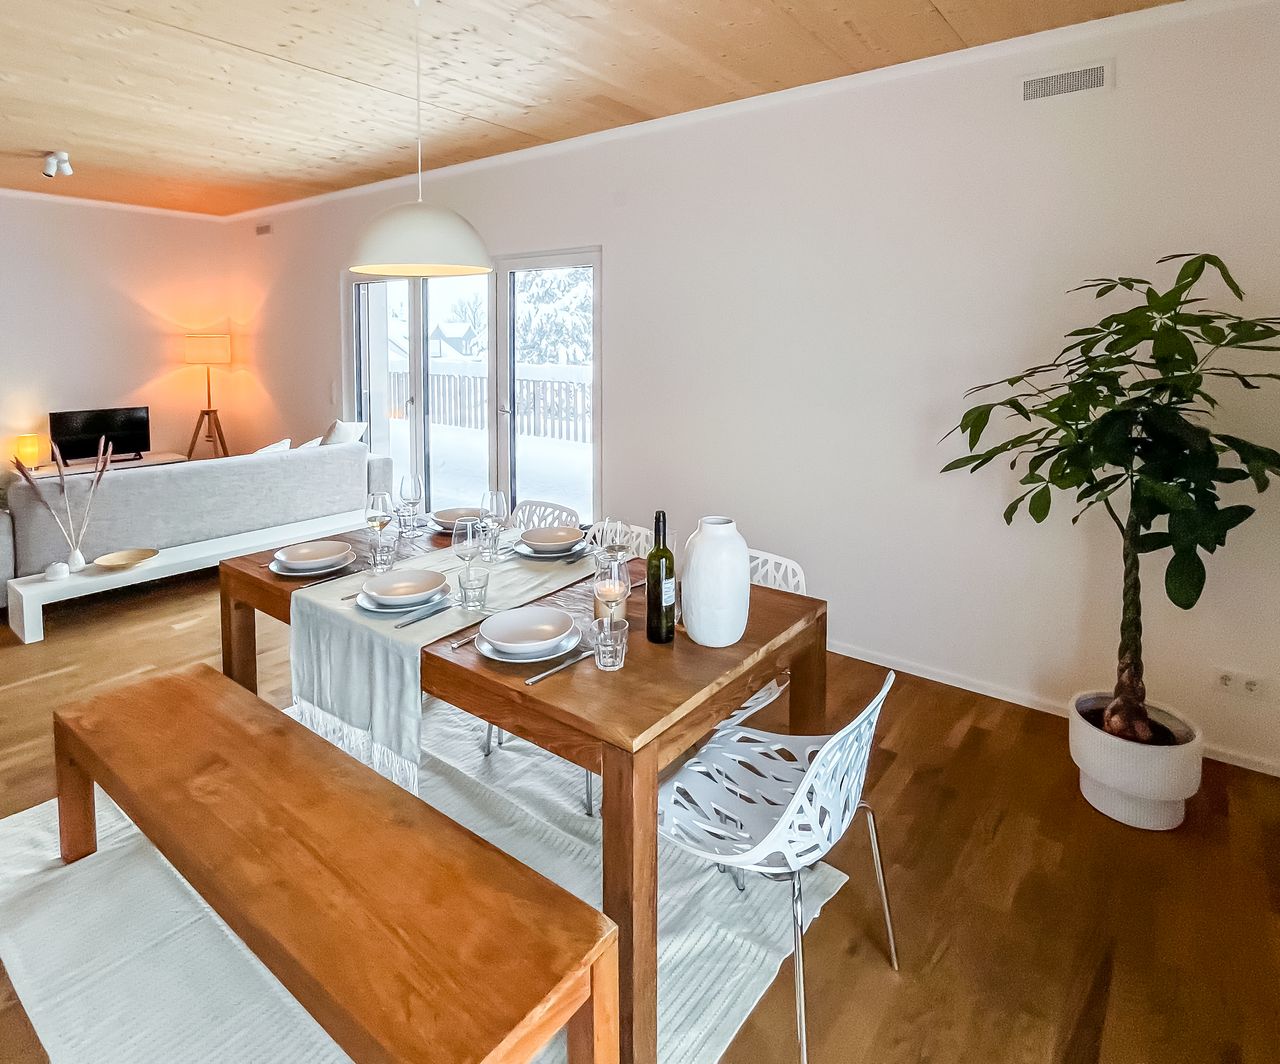 Fantastic & bright Penthouse apartment located in Freising